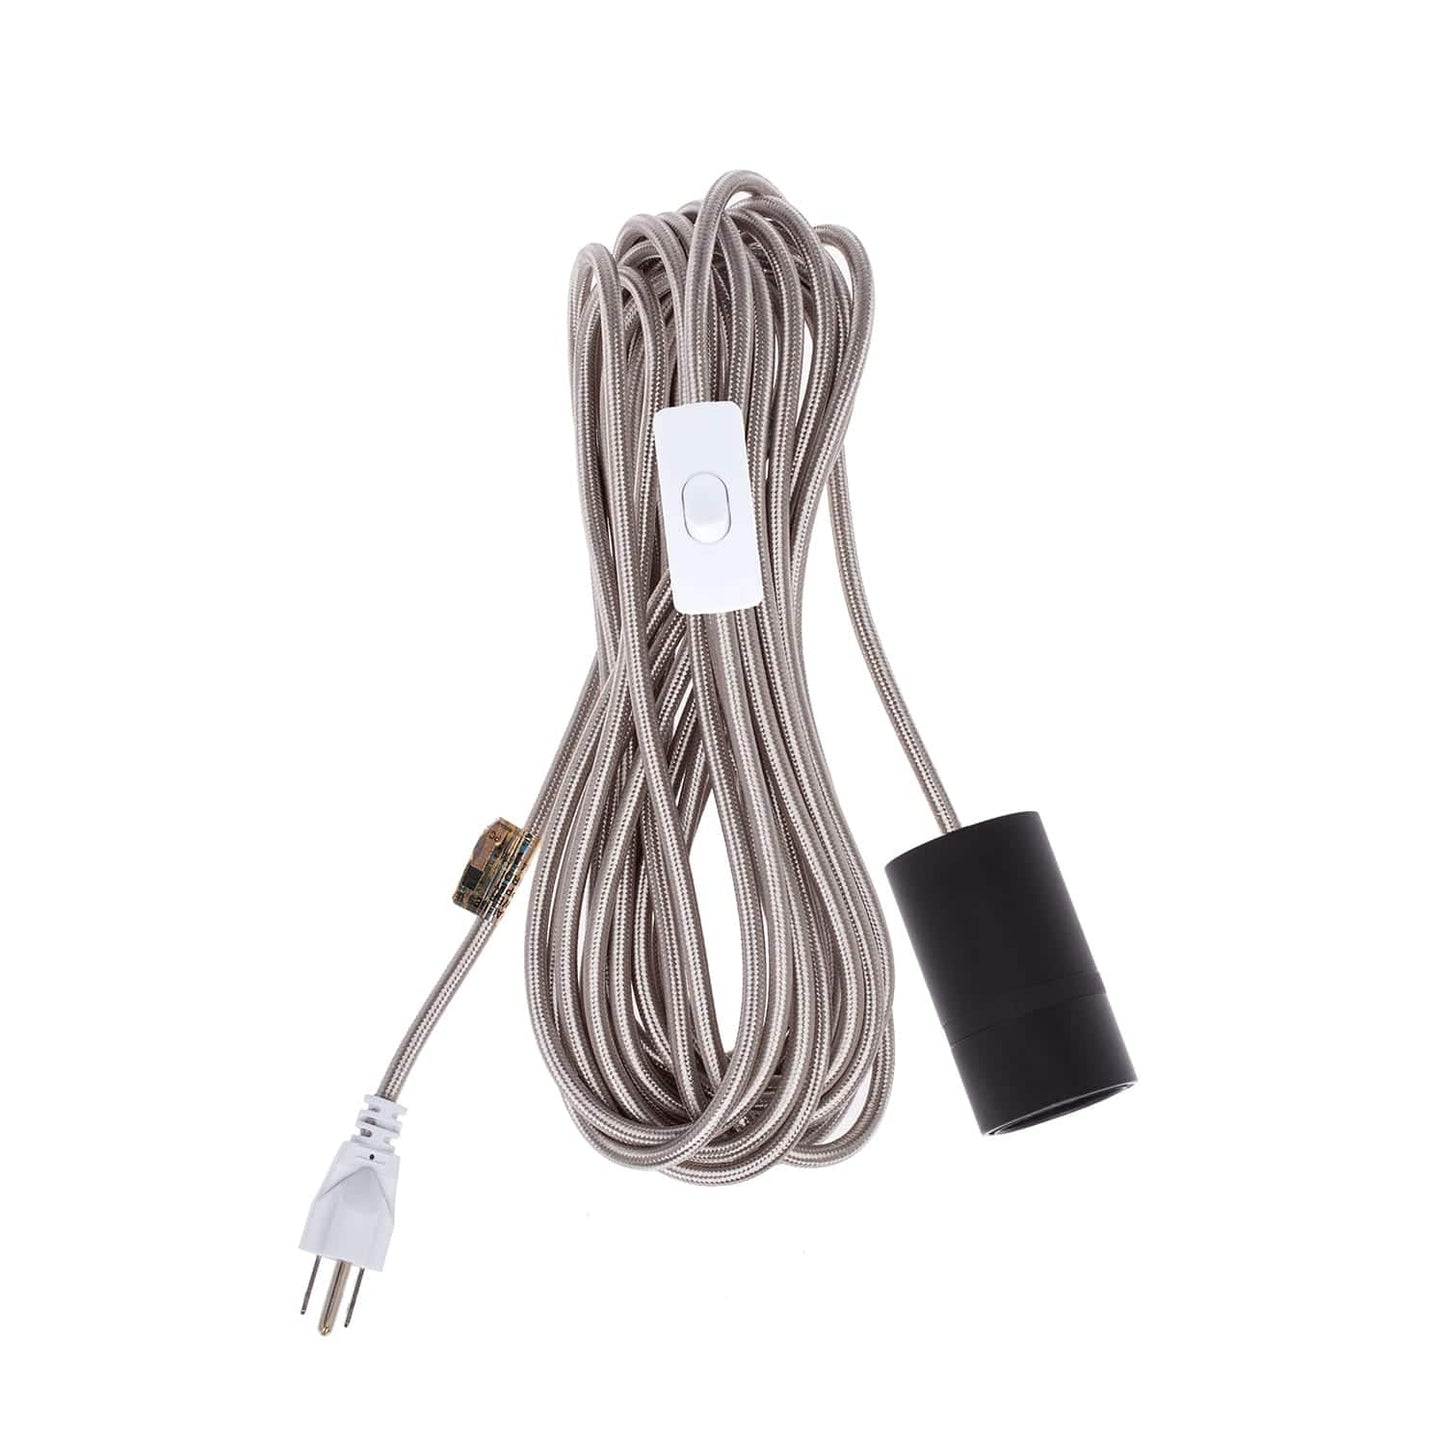 AiO Black Chroma Plug-In Cord Set